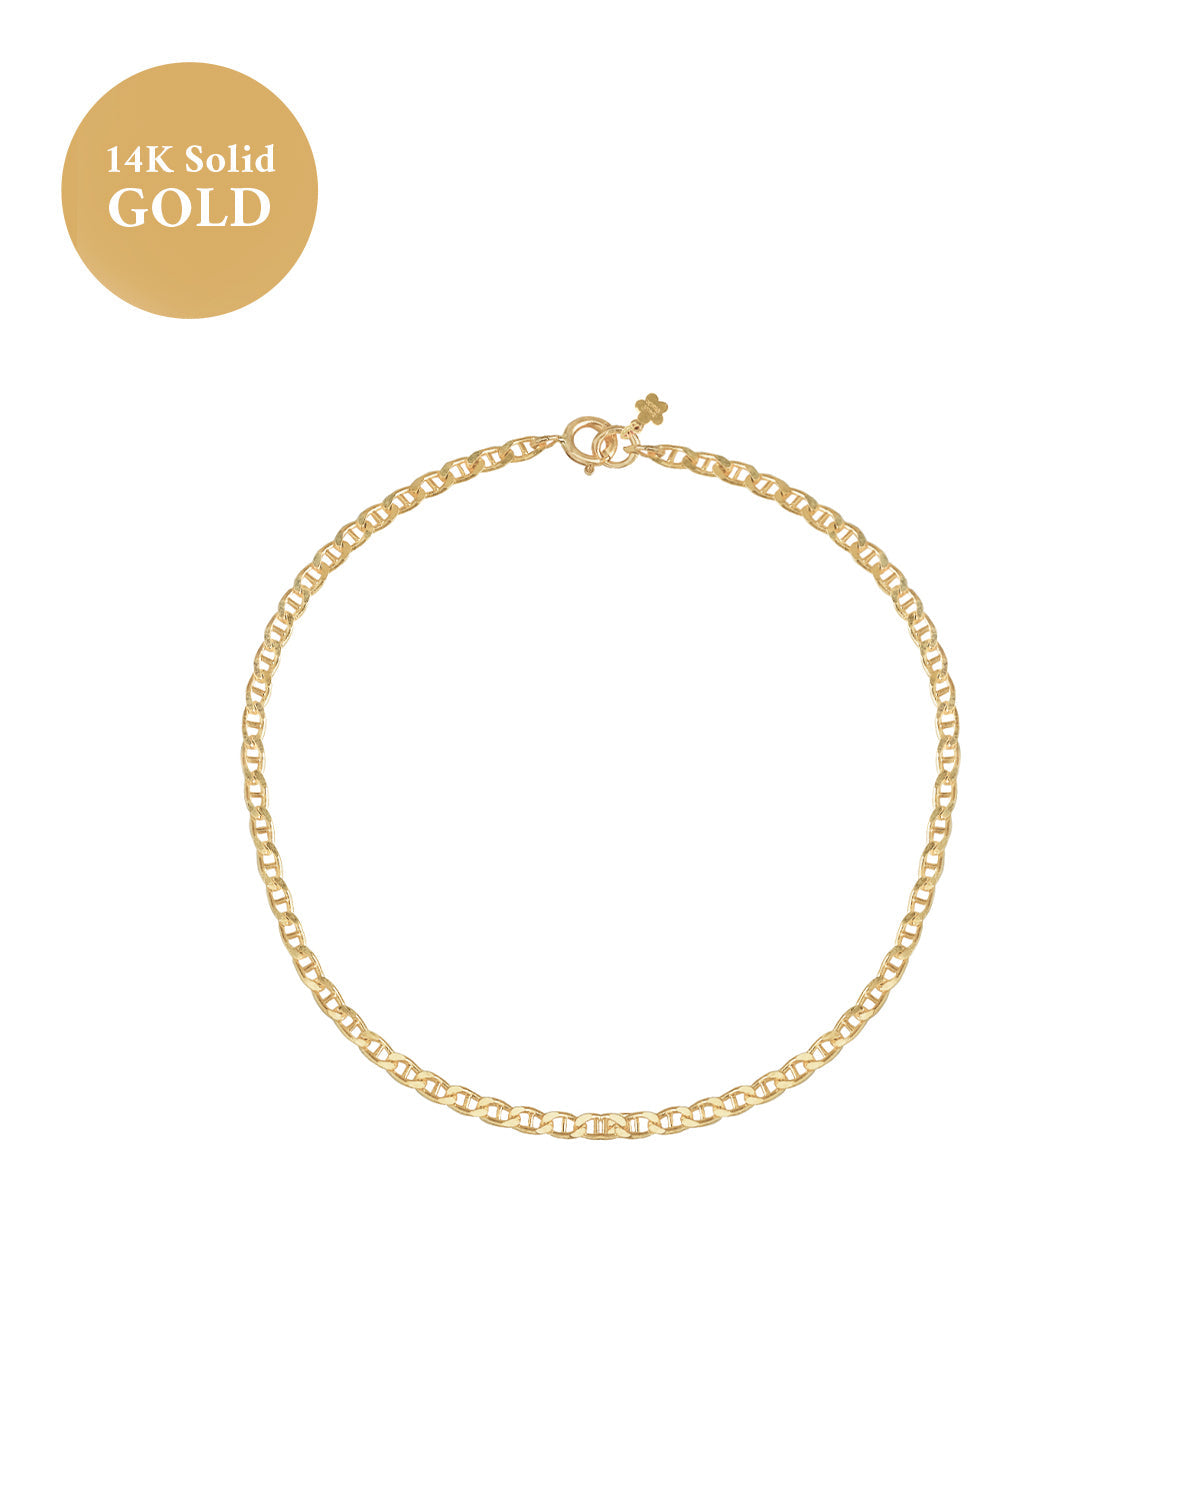 14K Solid Gold Mitchell Mariner Bracelet